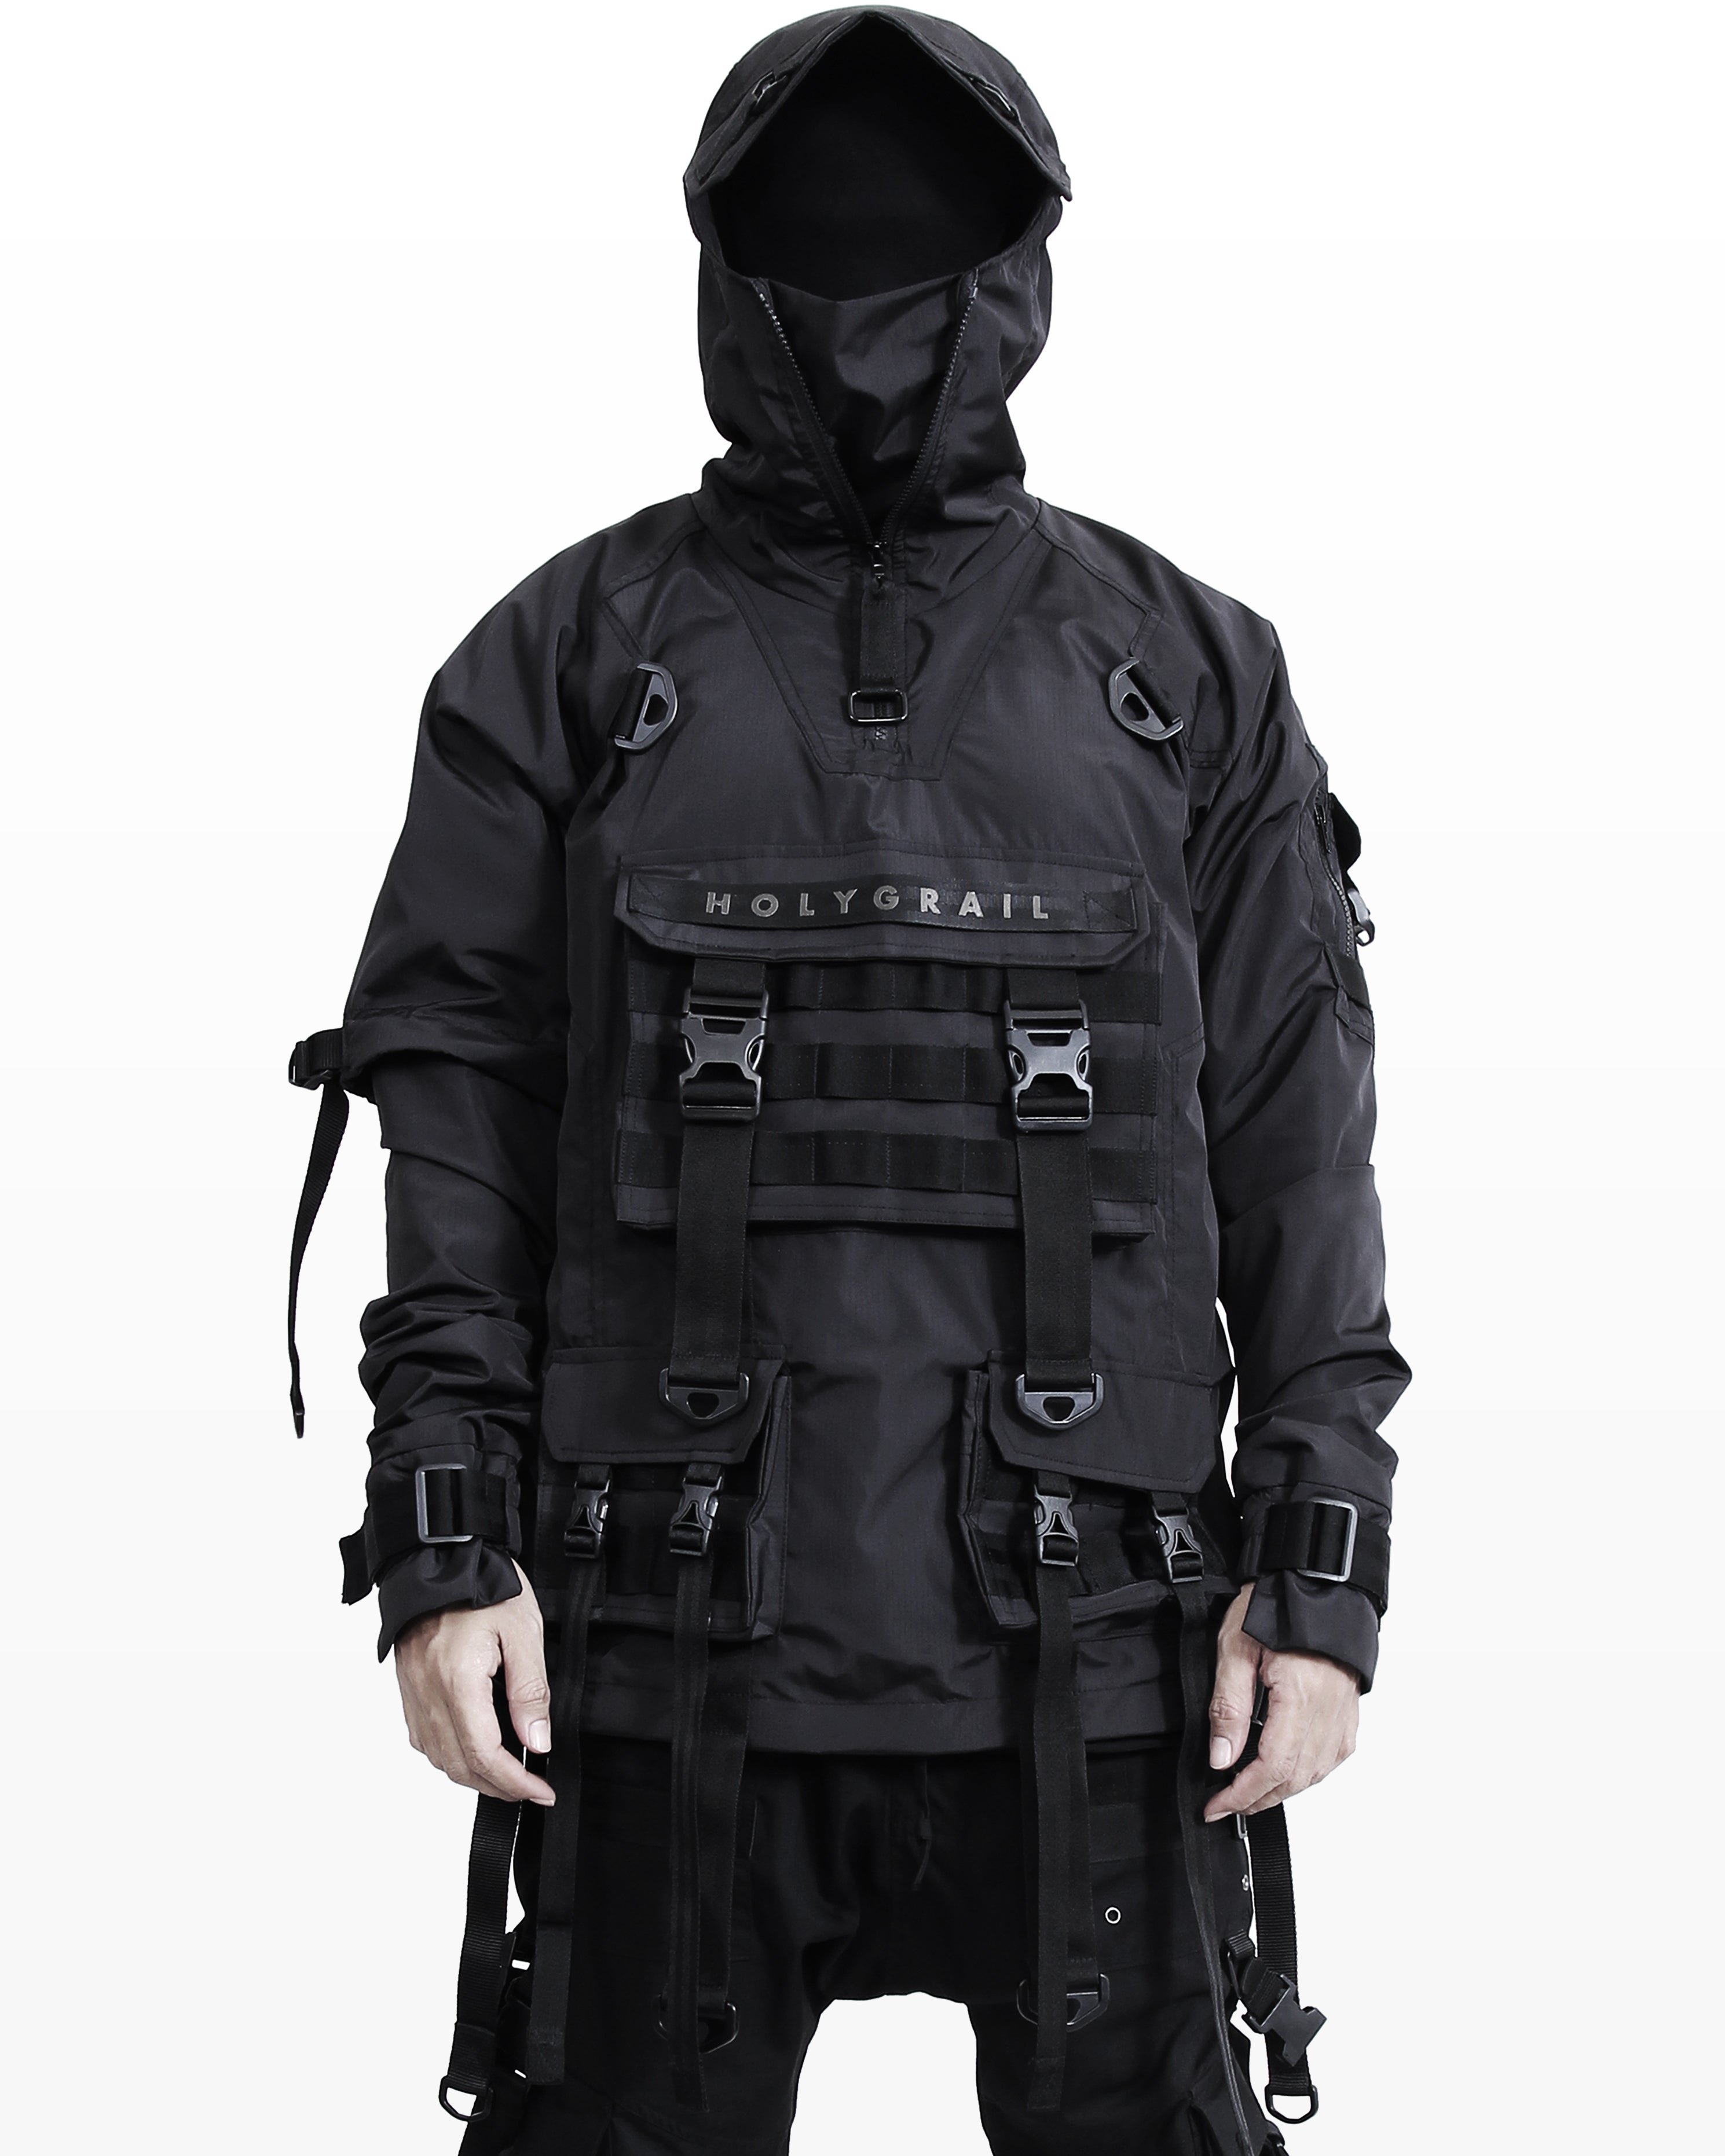 Cyberpunk clothes brands фото 95